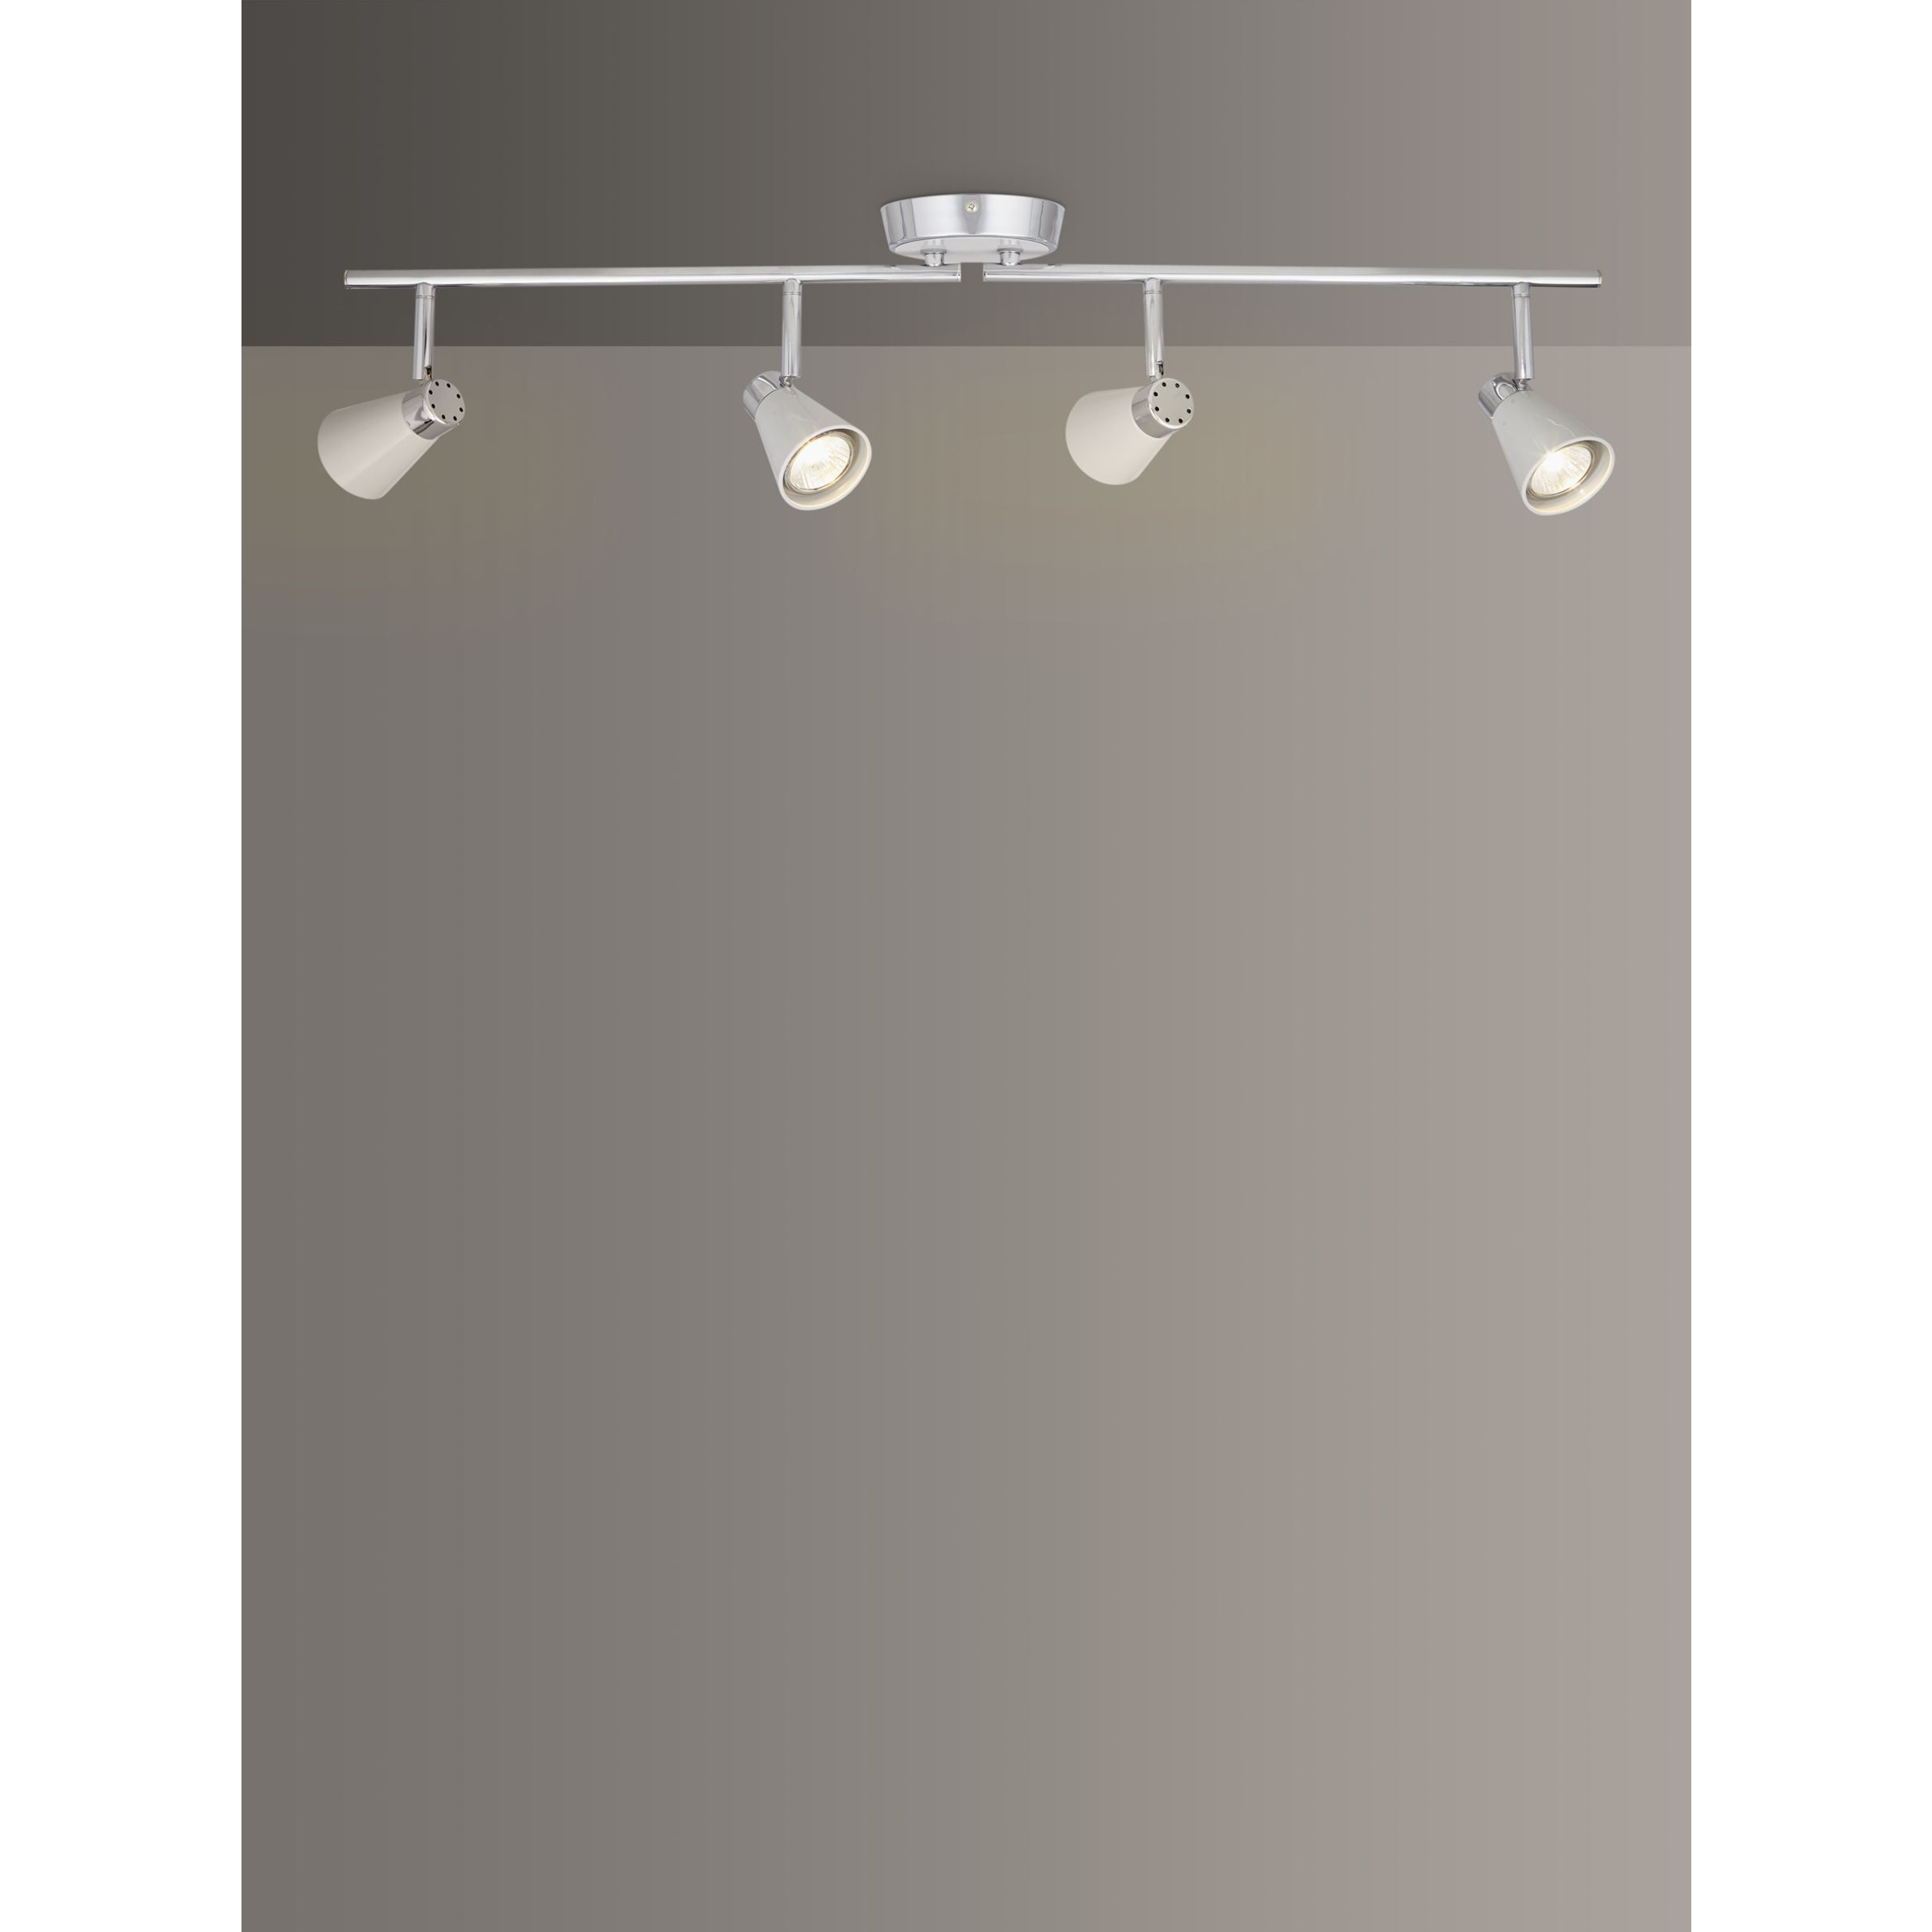 John Lewis Logan GU10 LED 4 Spotlight Ceiling Bar - image 1